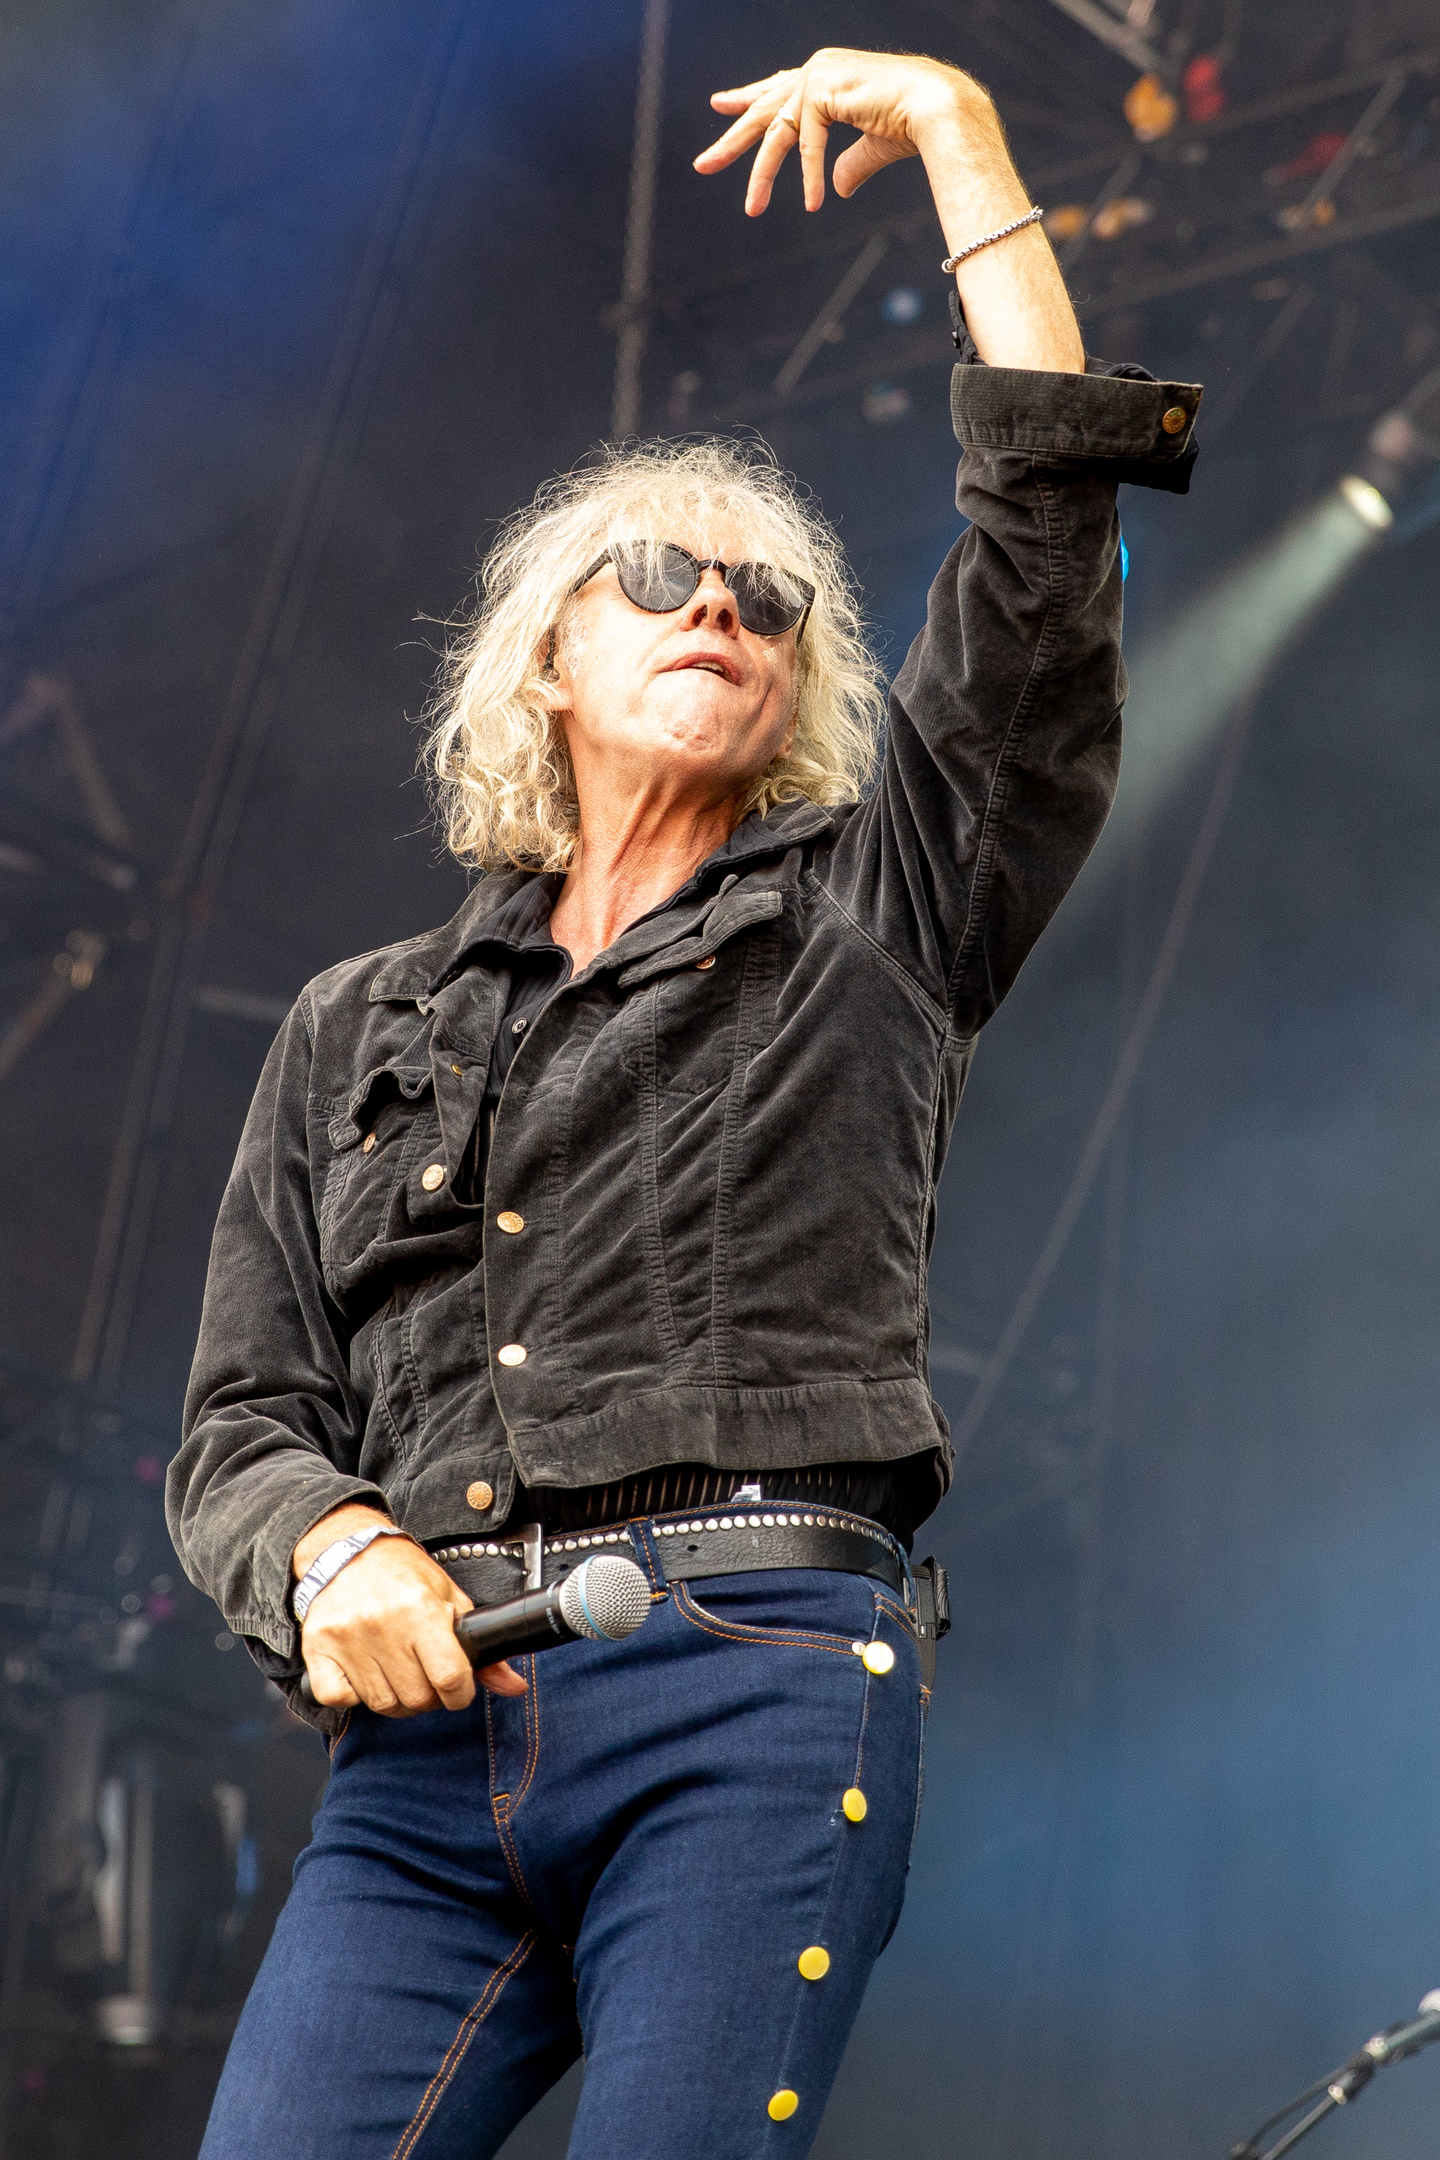 Bob Geldof of Boomtown Rats performs at Rewind Scotland on Sunday, July 22 2018